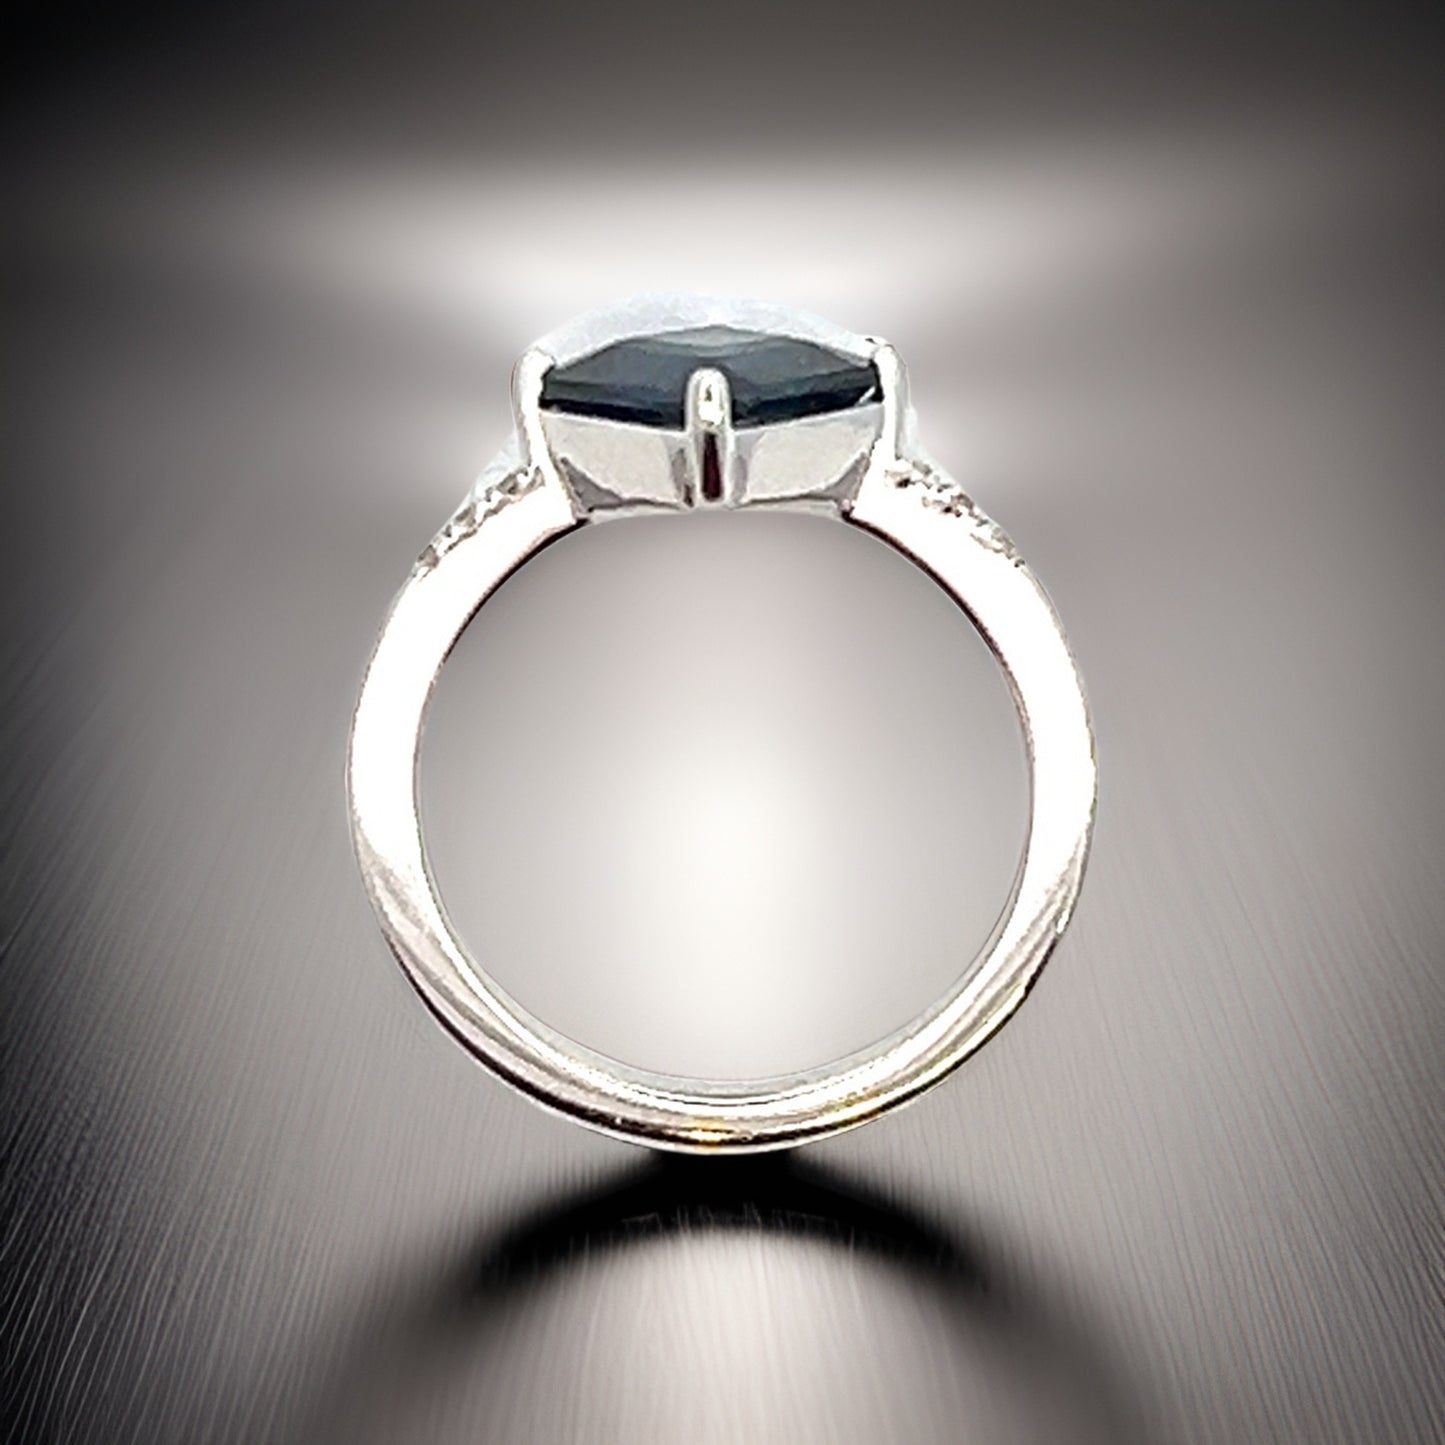 Natural Sapphire Diamond Ring 6.25 14k WG 2.24 TCW Certified $3,950 310591 - Certified Fine Jewelry